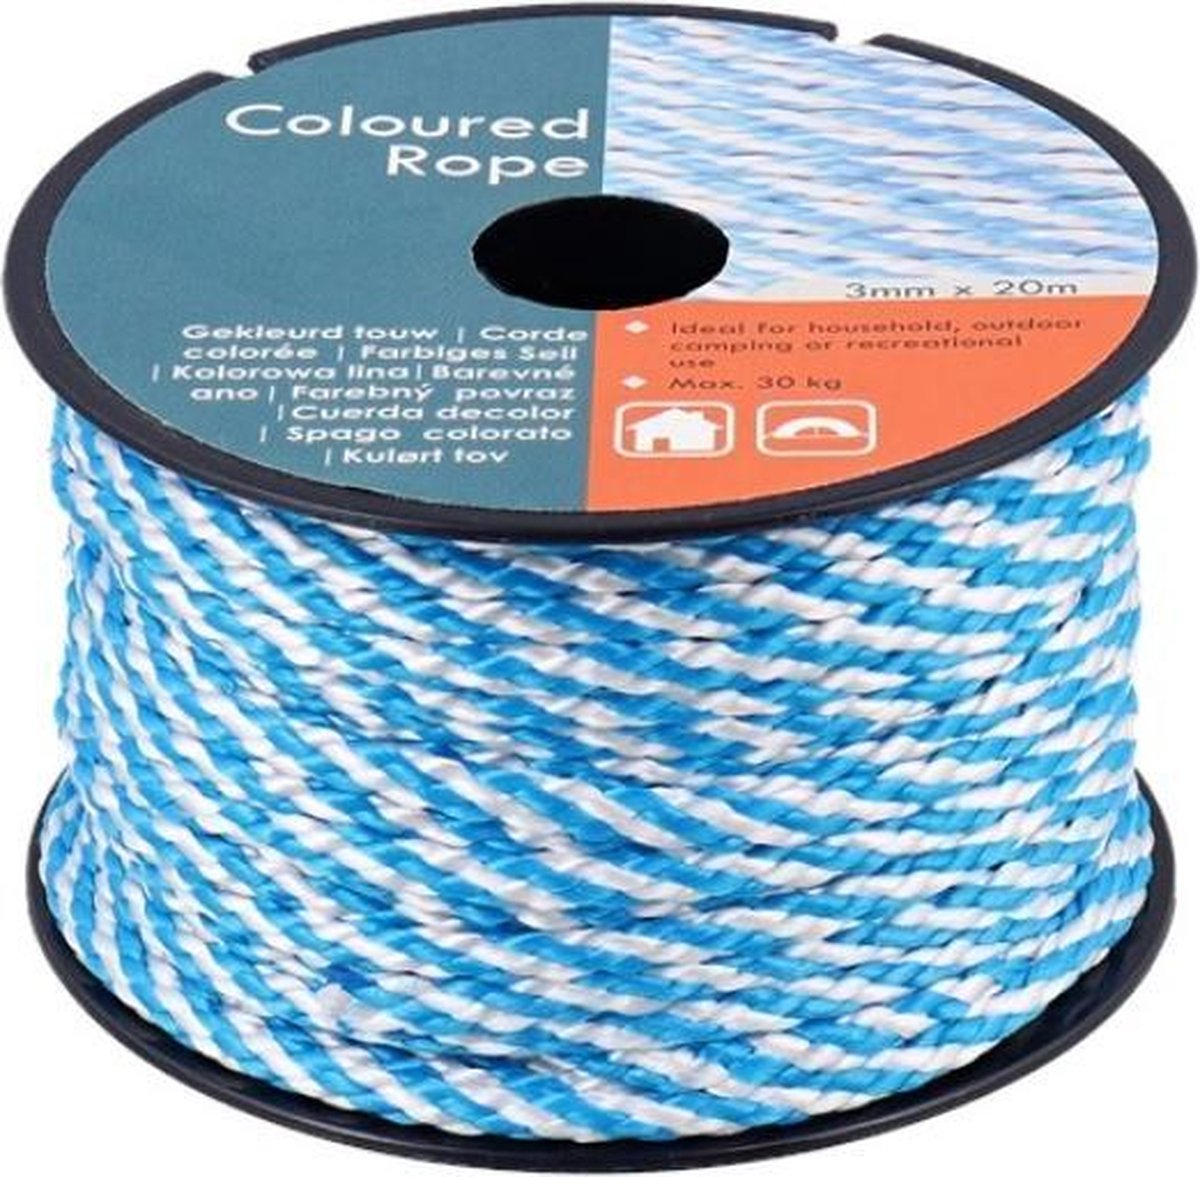 Herstellen klem Vol touw - 3mm x 20m - rood-wit + blauw-wit - elk 1 stuks | bol.com